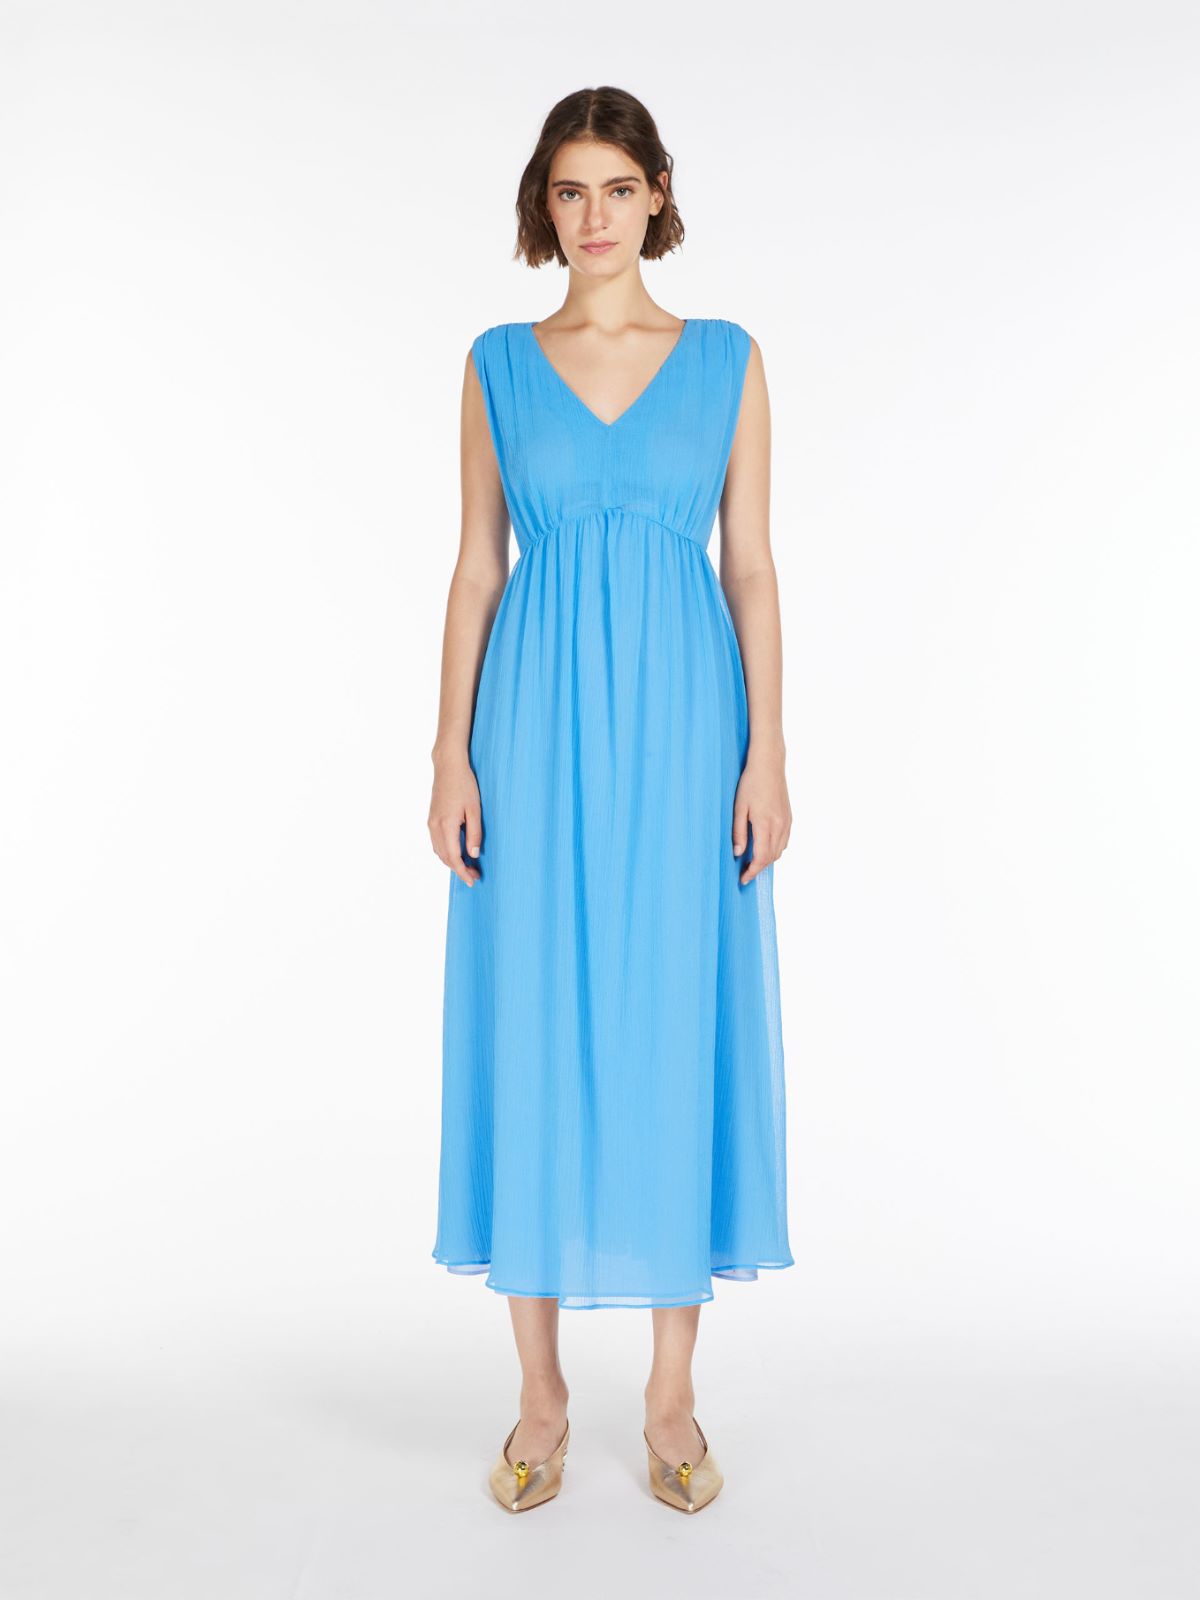 Cotton crêpe dress - LIGHT BLUE - Weekend Max Mara - 2